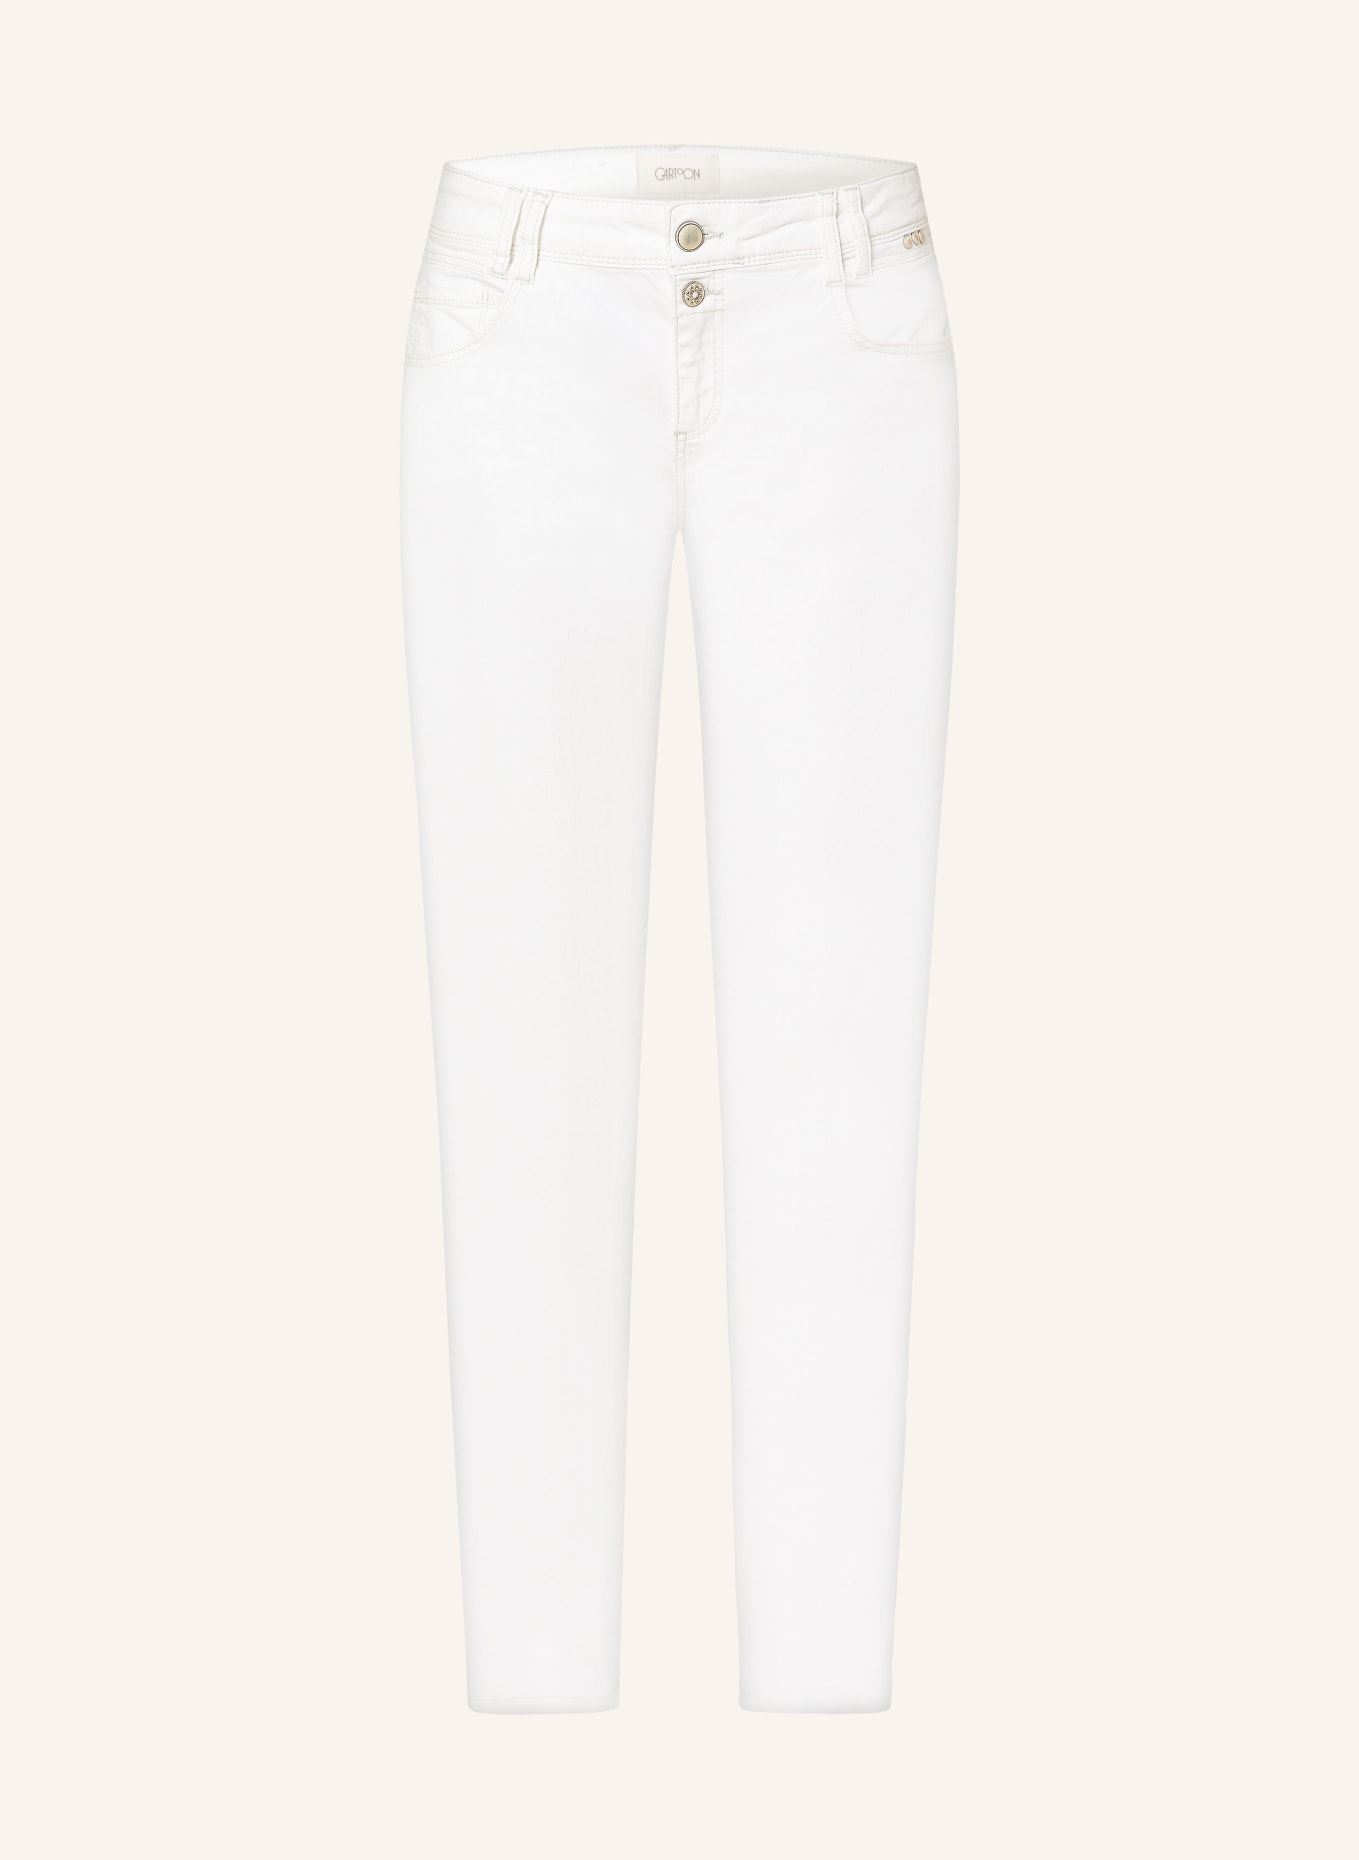 CARTOON Jeans, Farbe: 1620 WHITE DENIM (Bild 1)